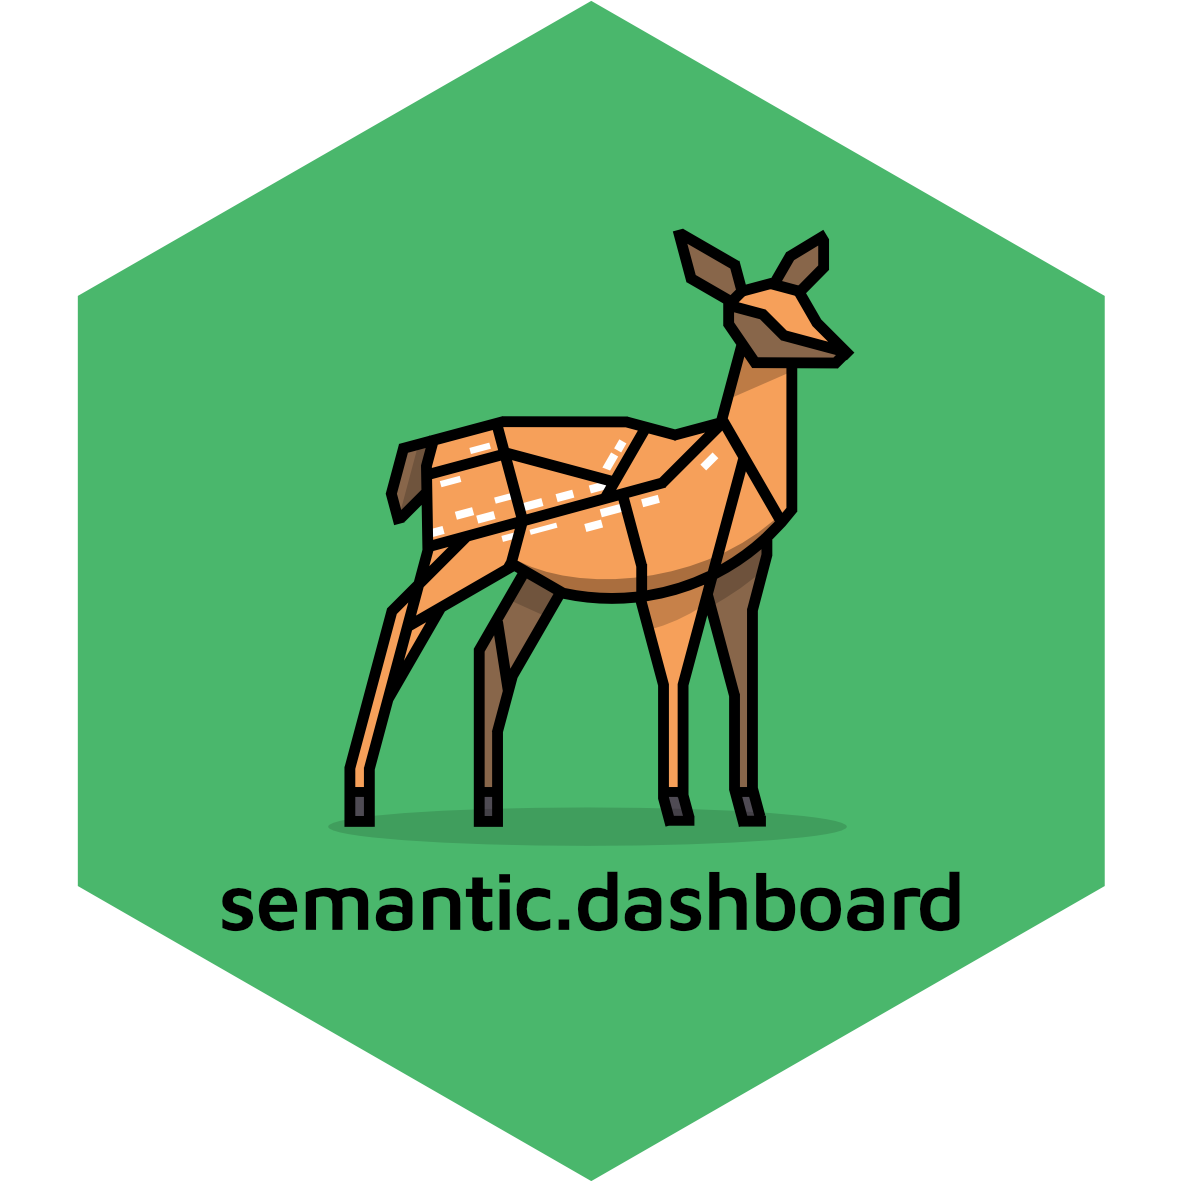 semantic.dashboard logo